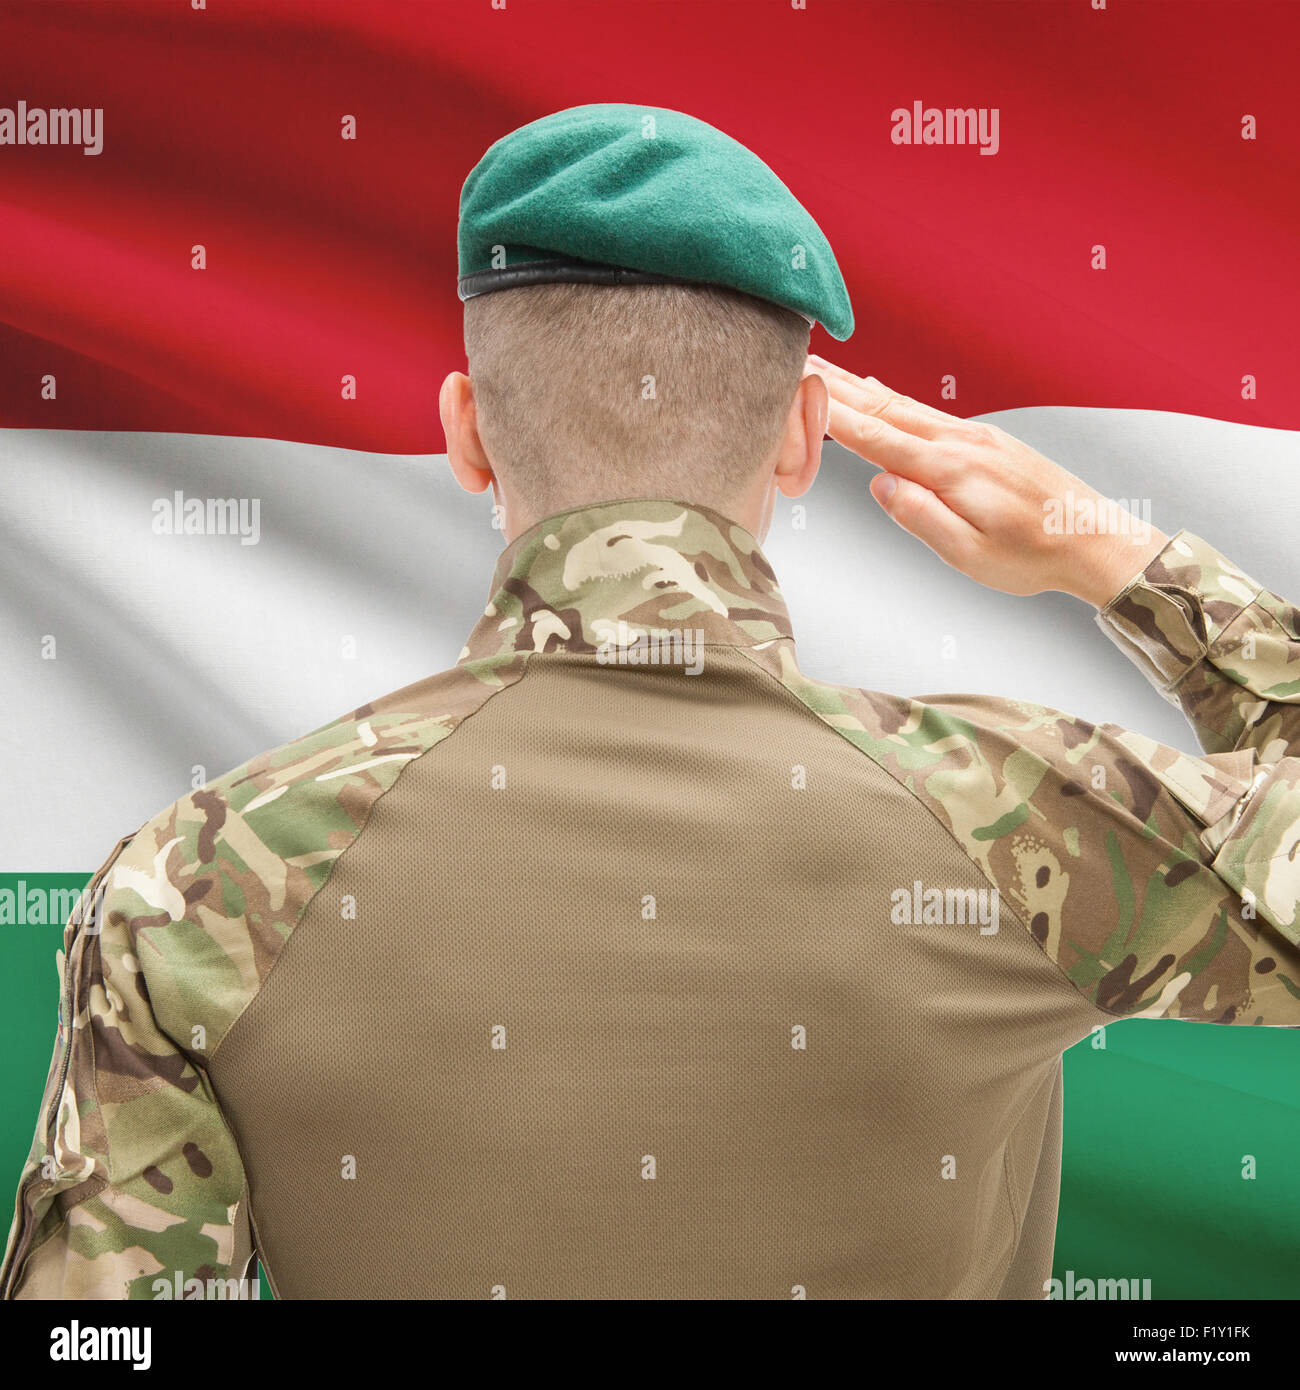 soldier-in-hat-facing-national-flag-series-hungary-F1Y1FK.jpg